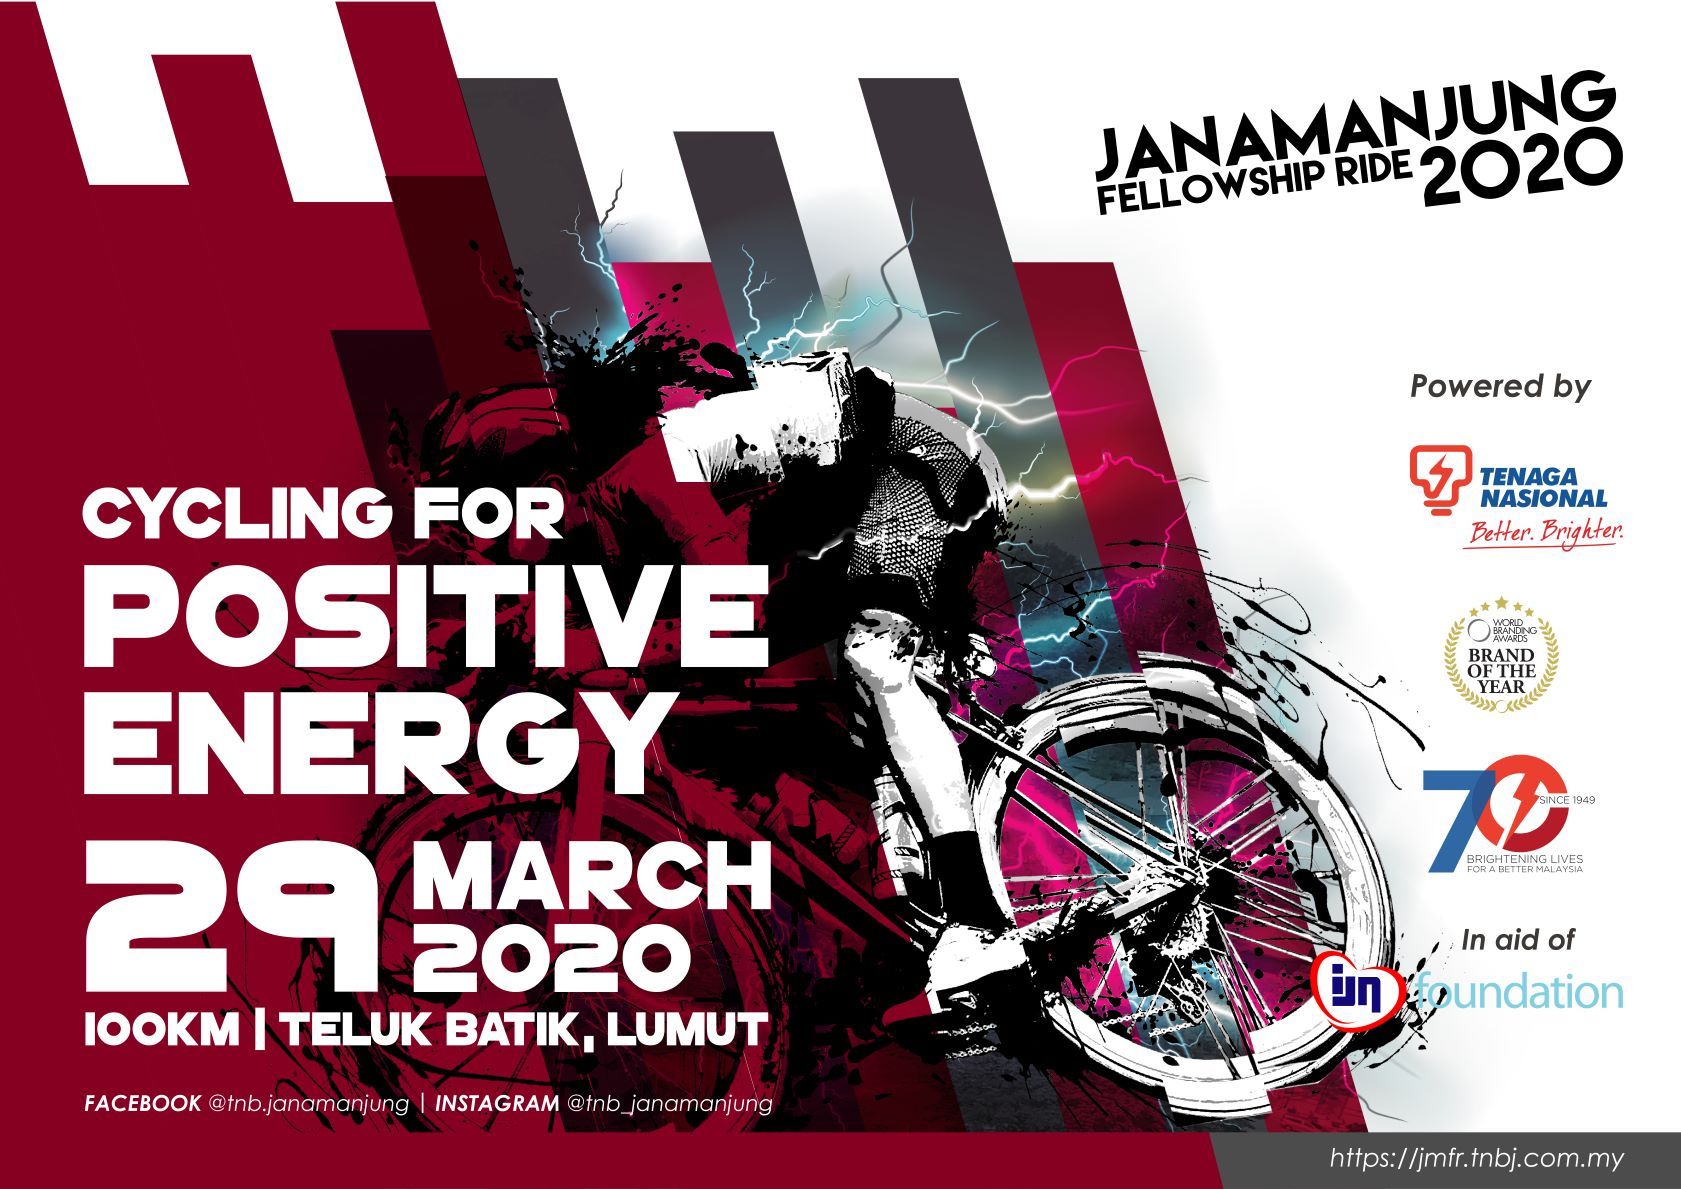 29/3 - Janamanjung Fellowship Ride JMFR 2020